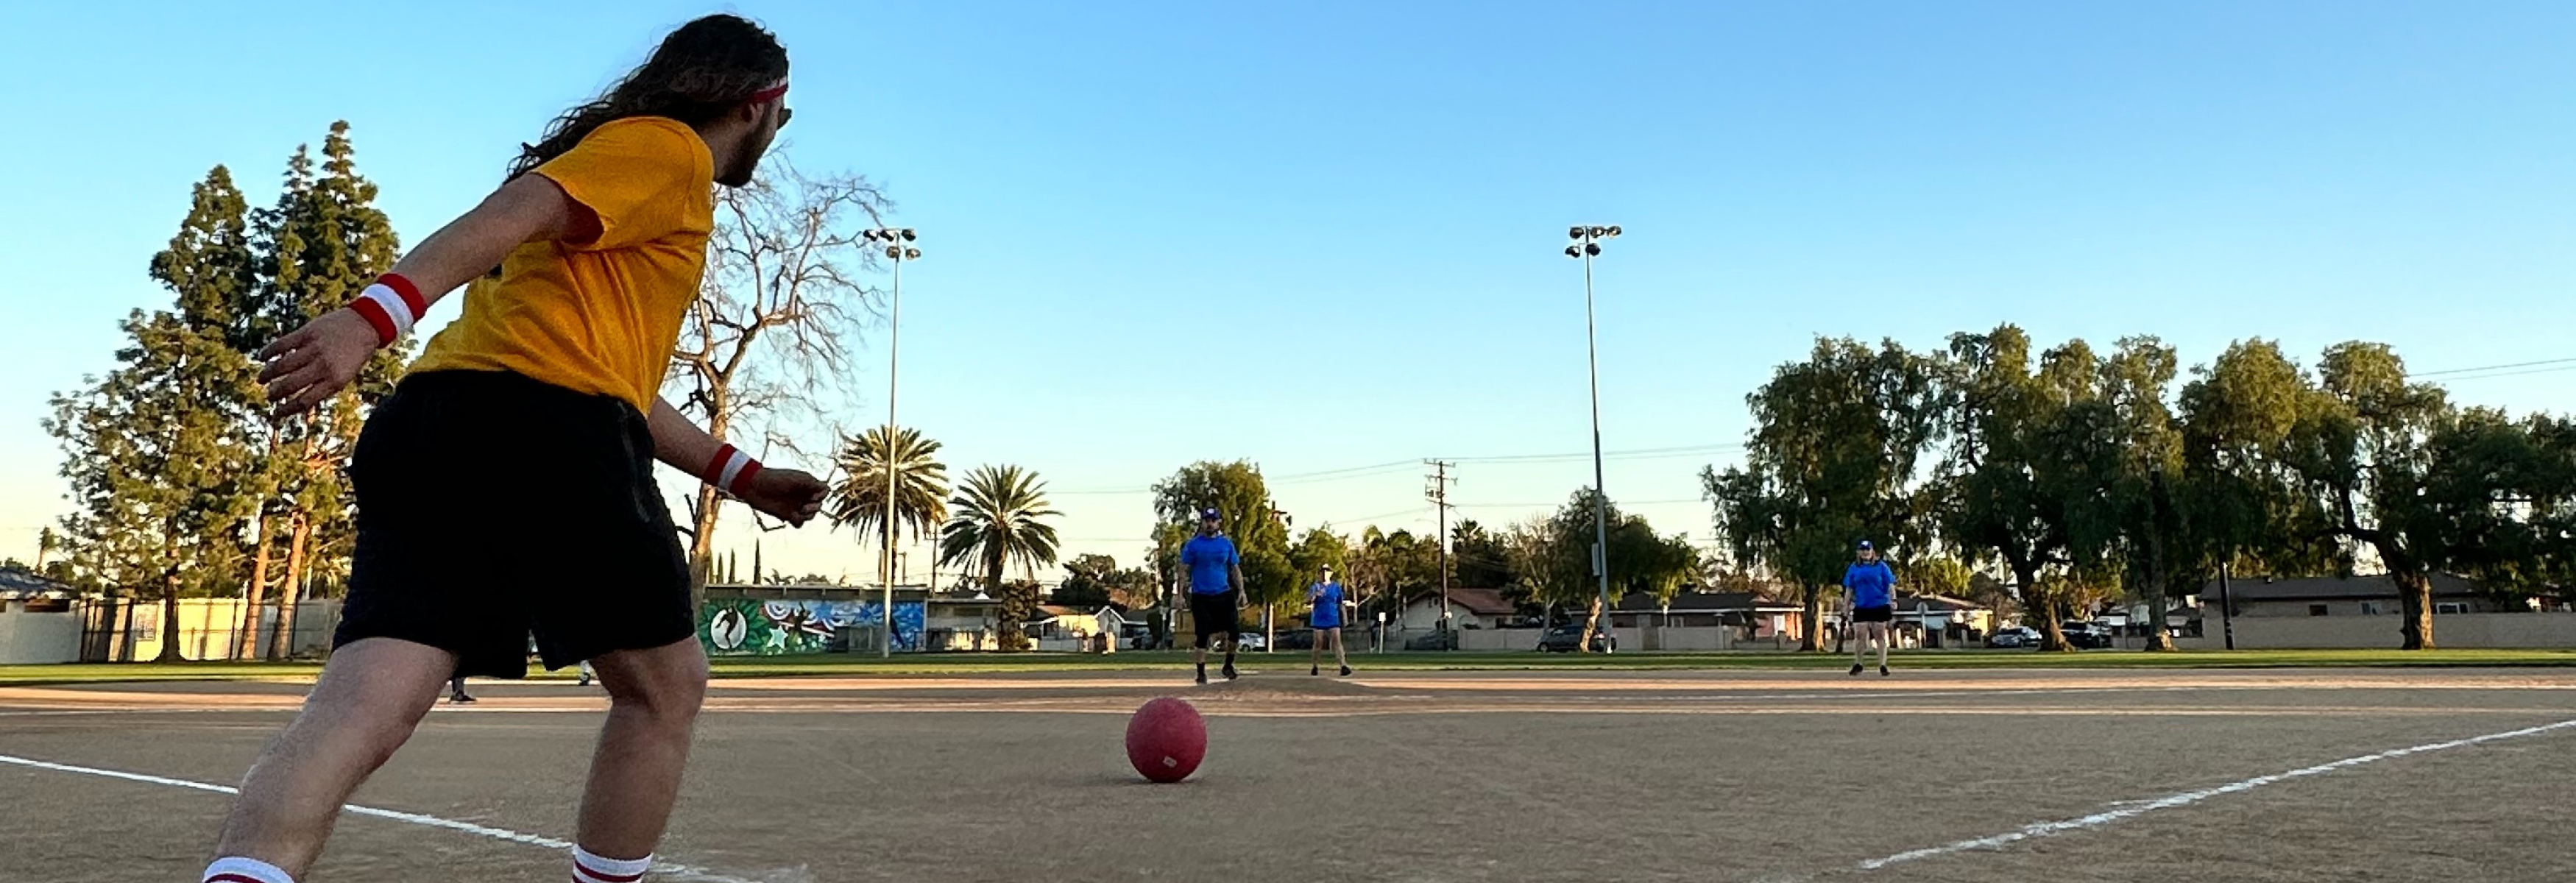 Person playing kickball